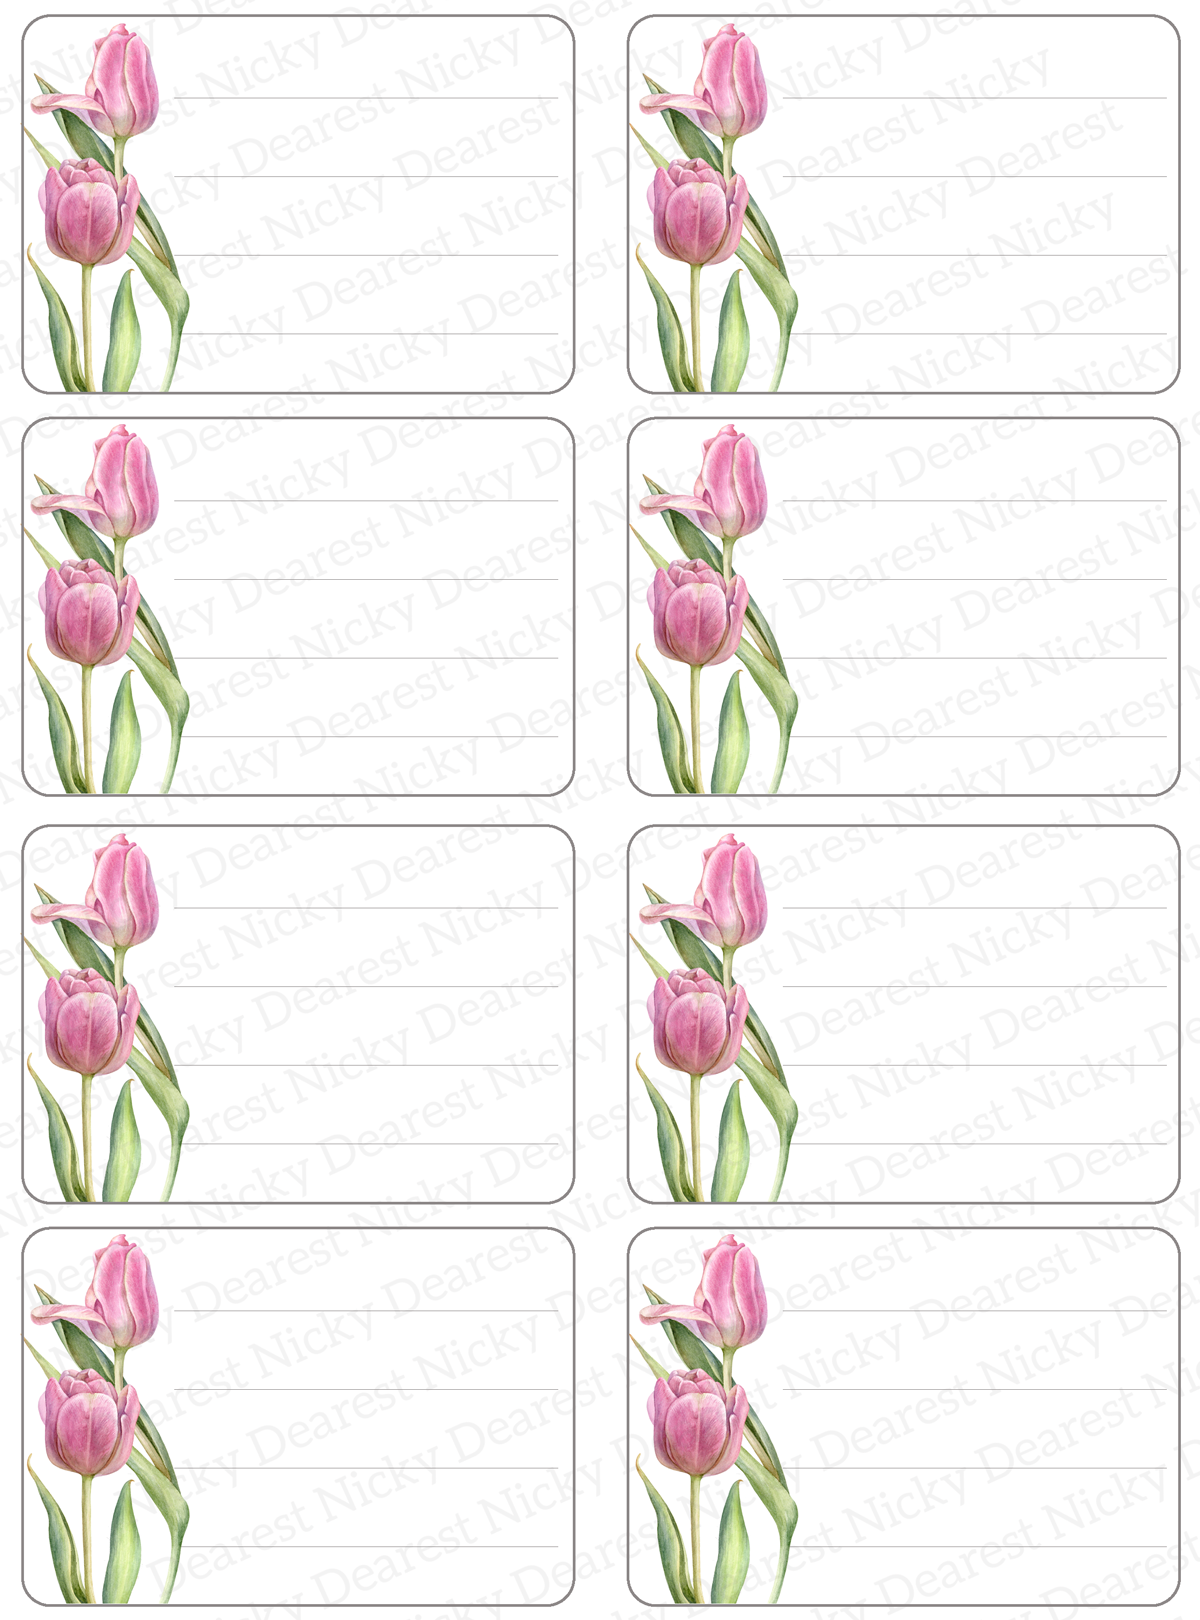 Étiquettes d'adresse de tulipes roses<br> Lot de 16